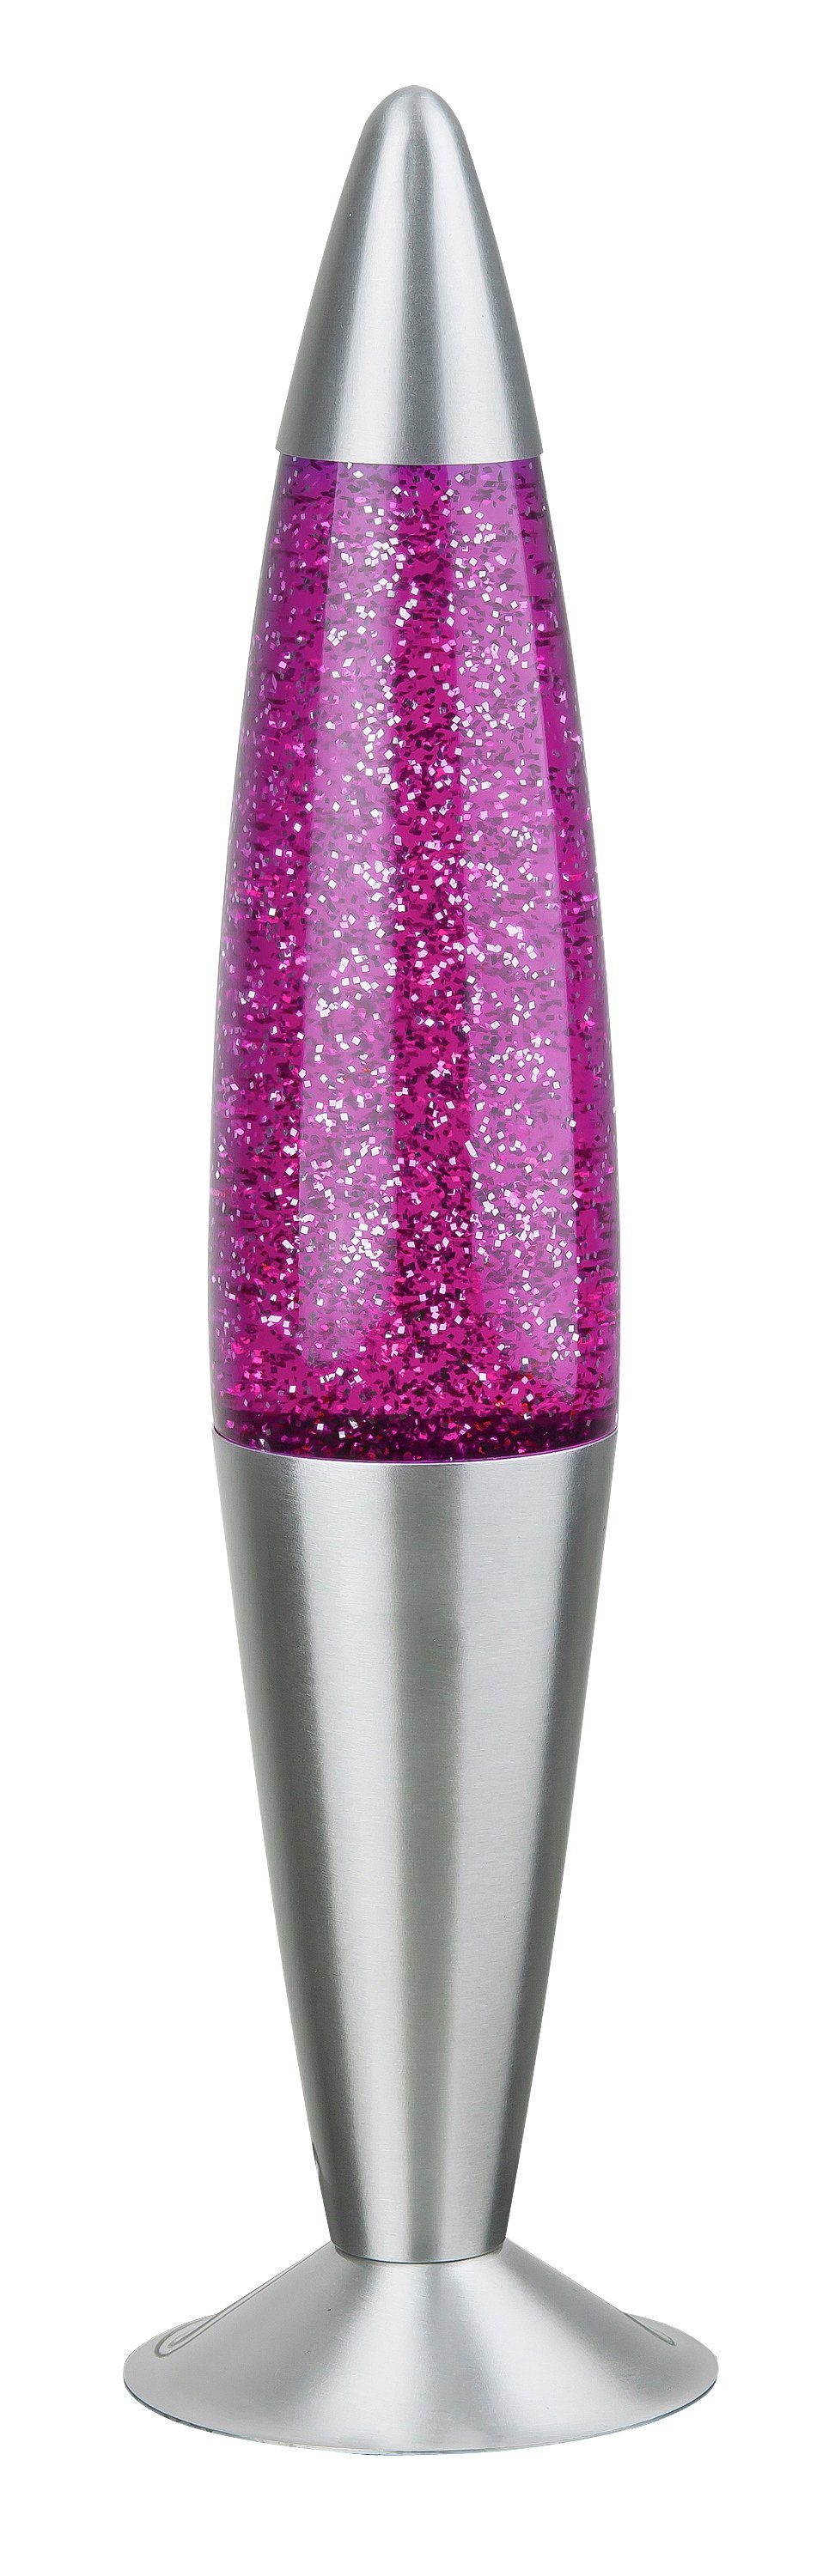 Rabalux Lavalampe Glitter, inklusive Leuchtmittel, Glitterlampe, Retro